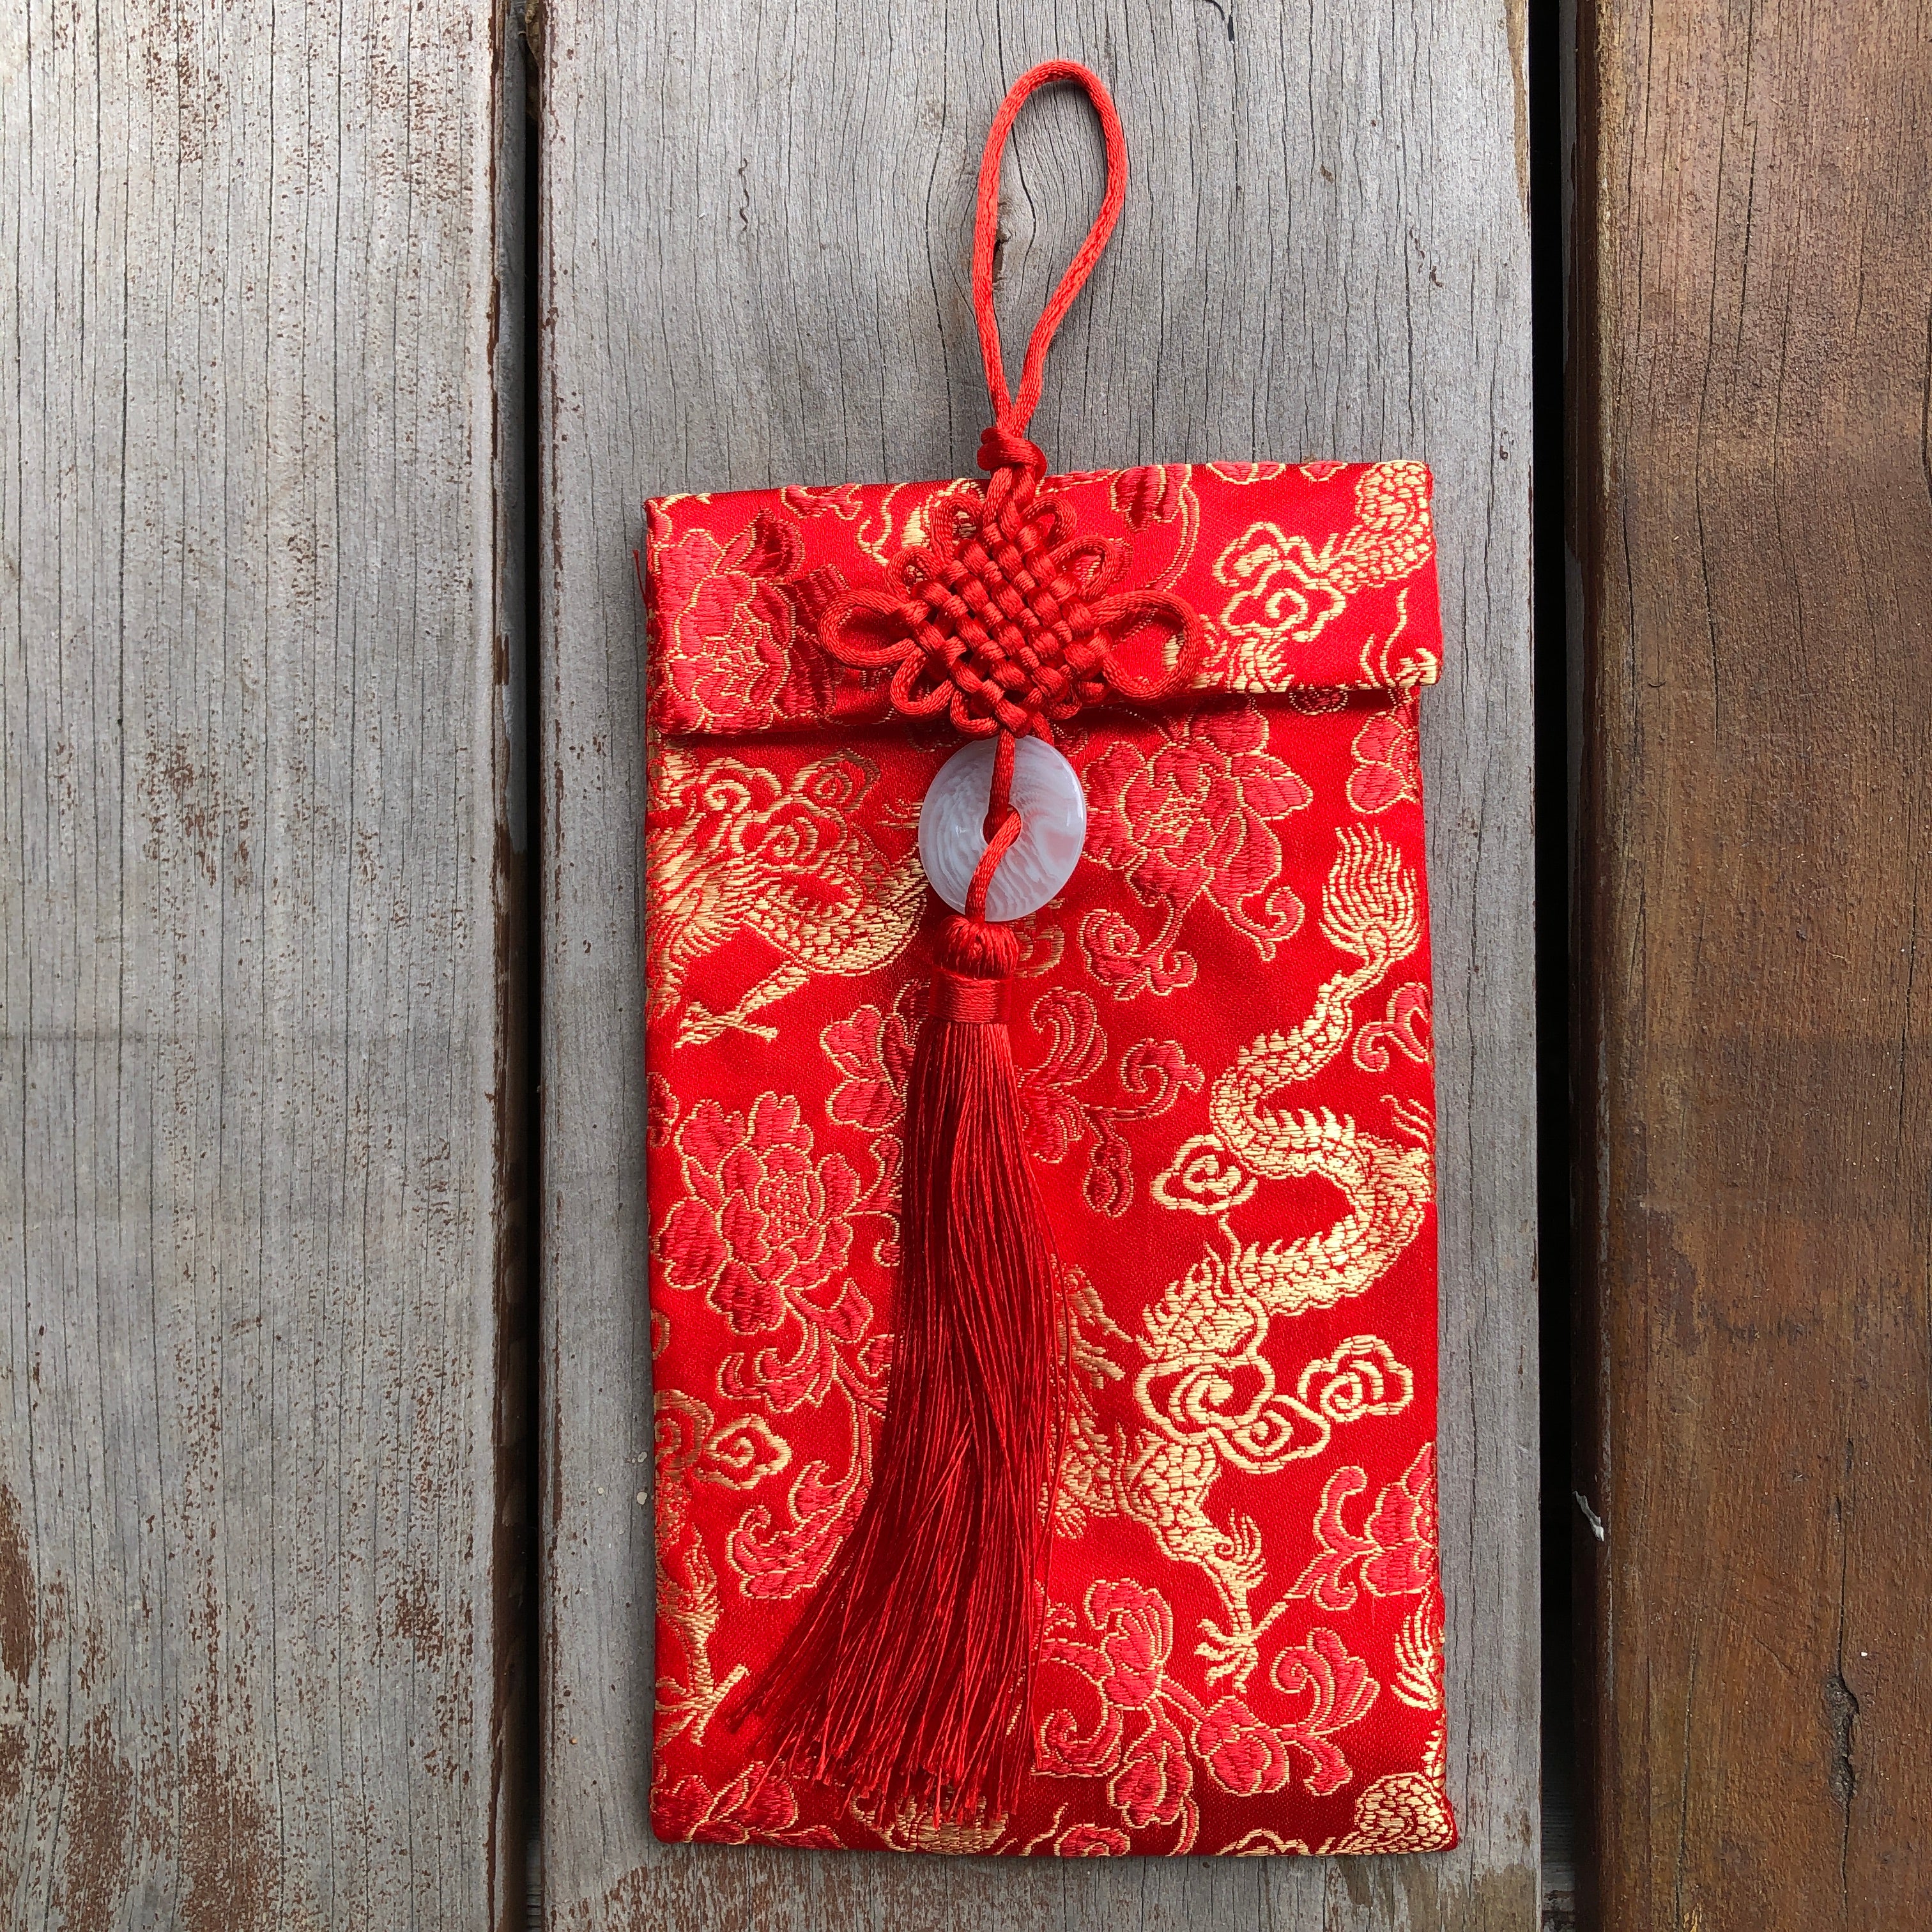 Luxury Red envelope - Silk Dragon